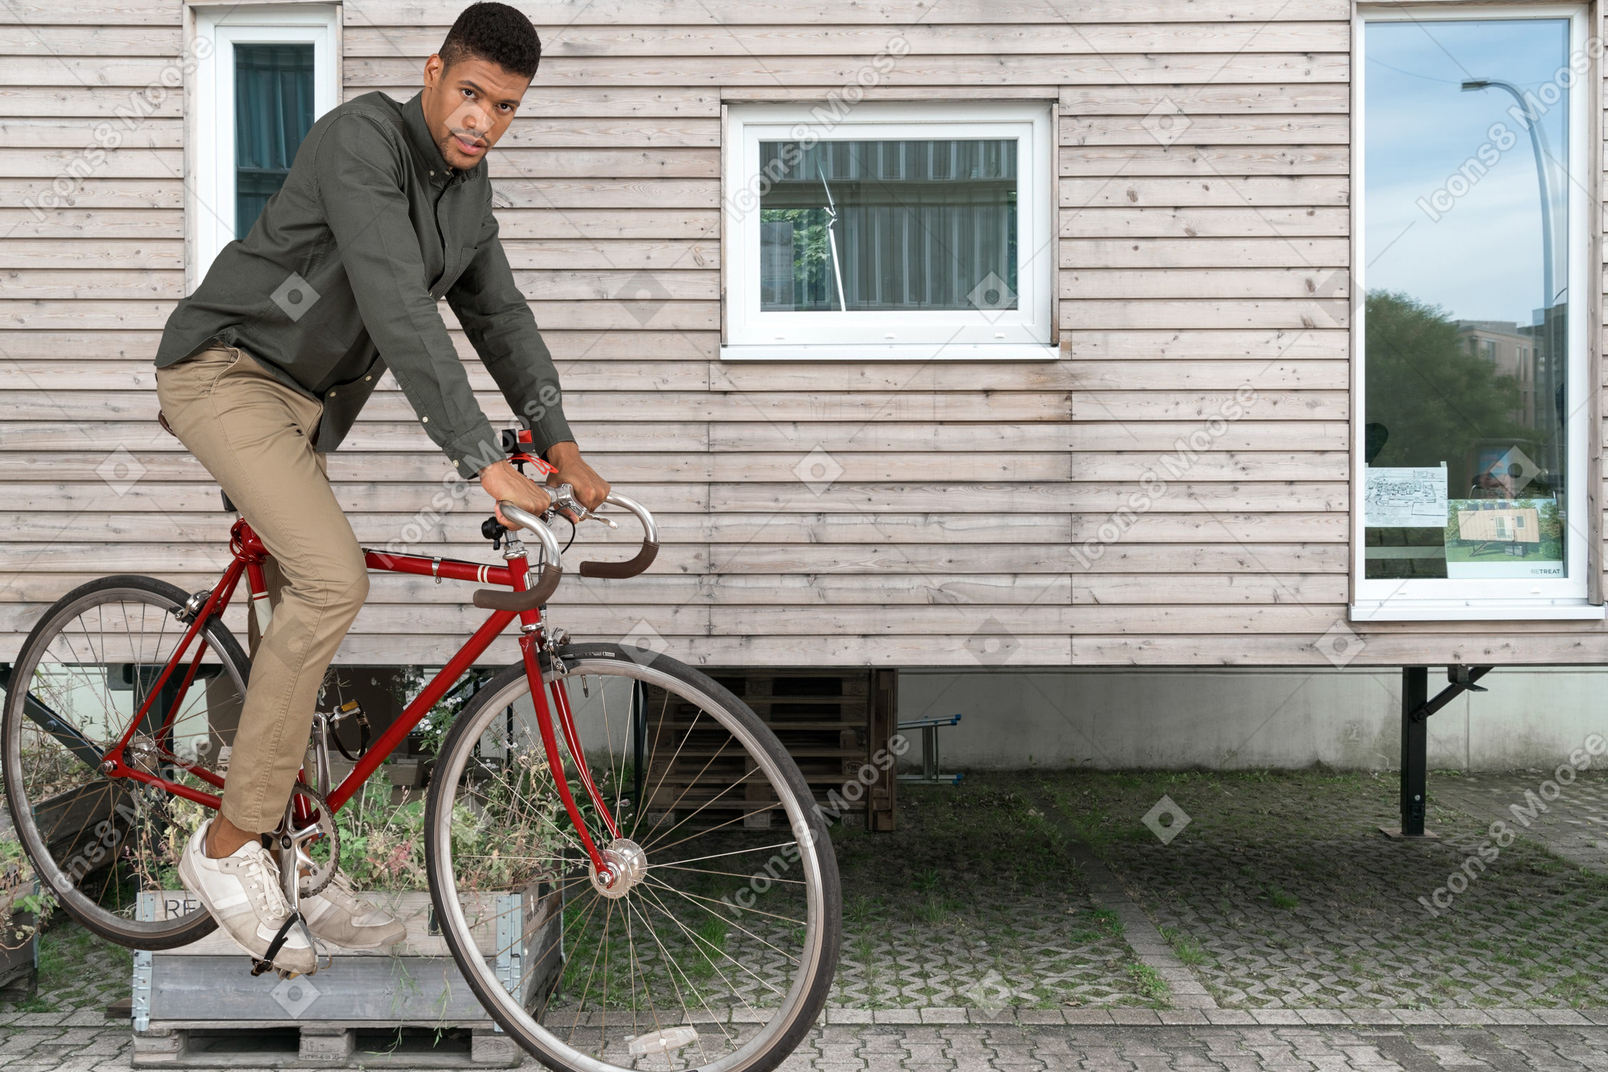 A man riding a red bike next to a house